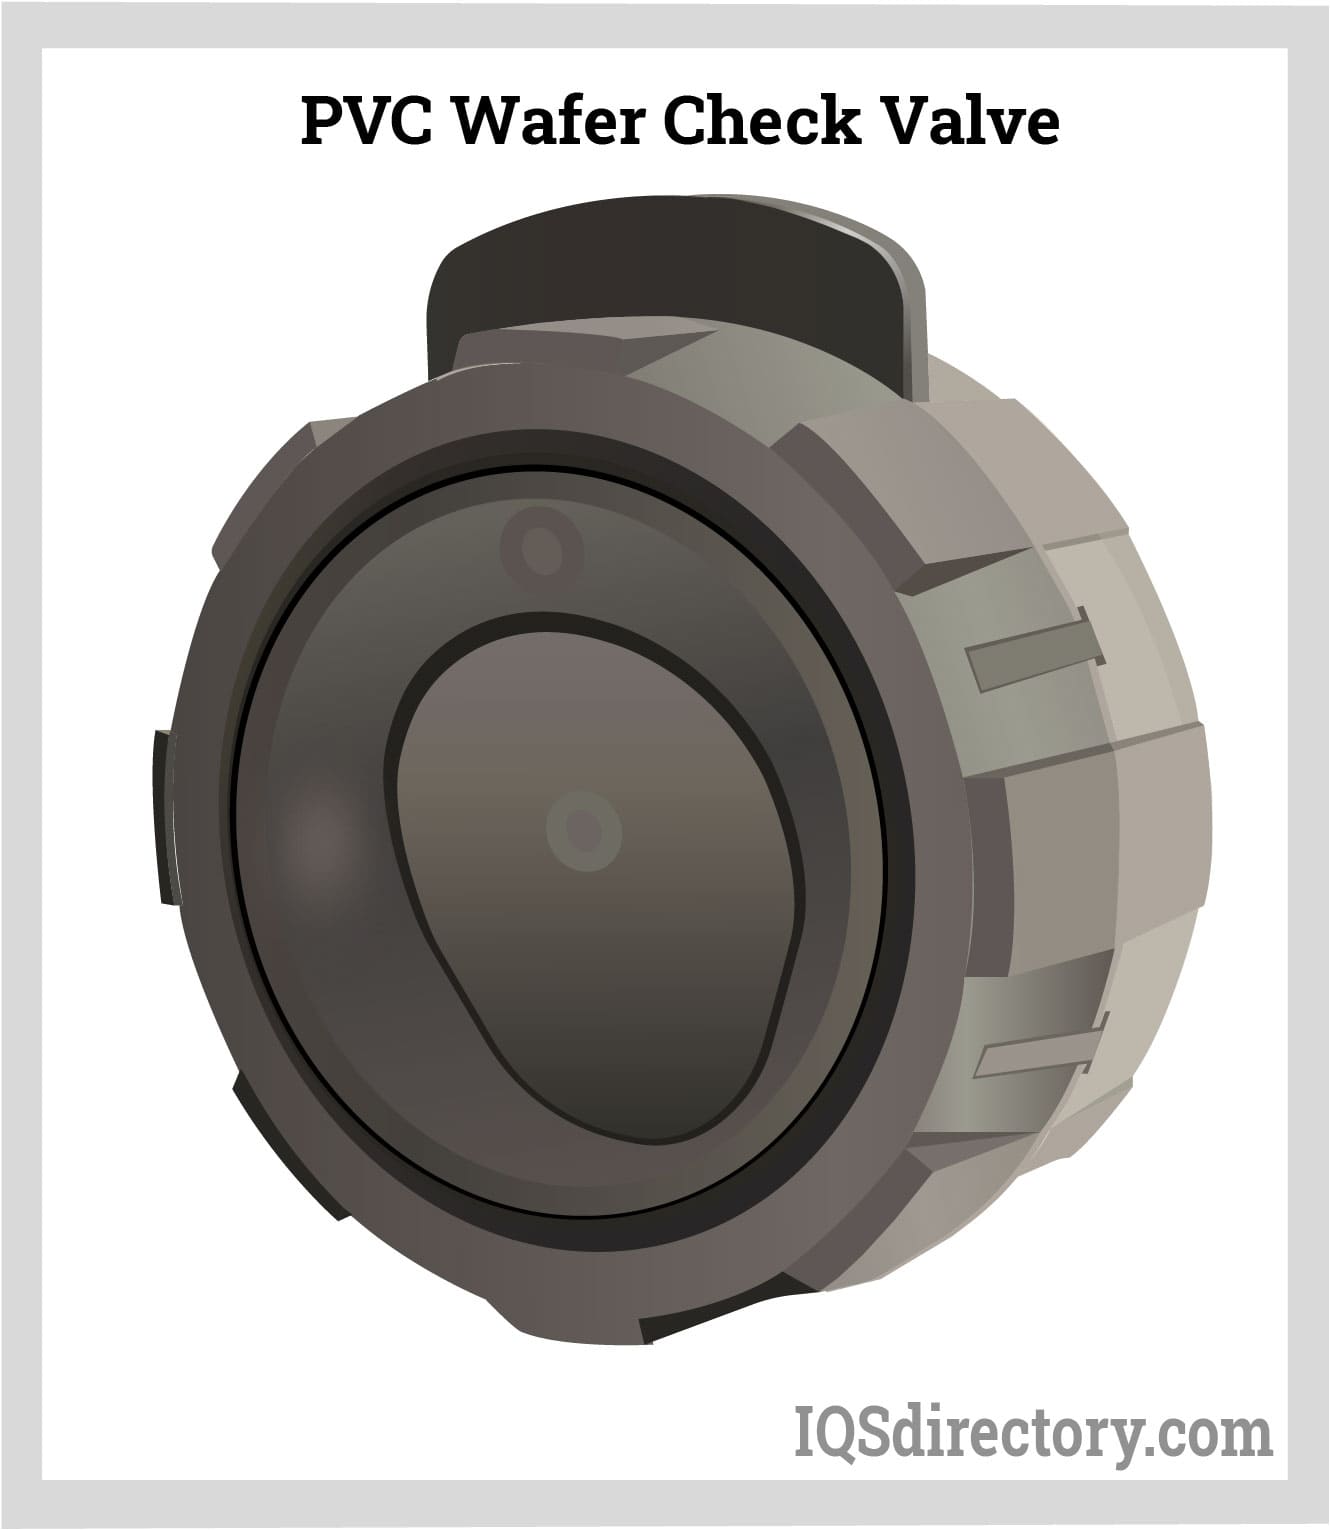 PVC Wafer Check Valve